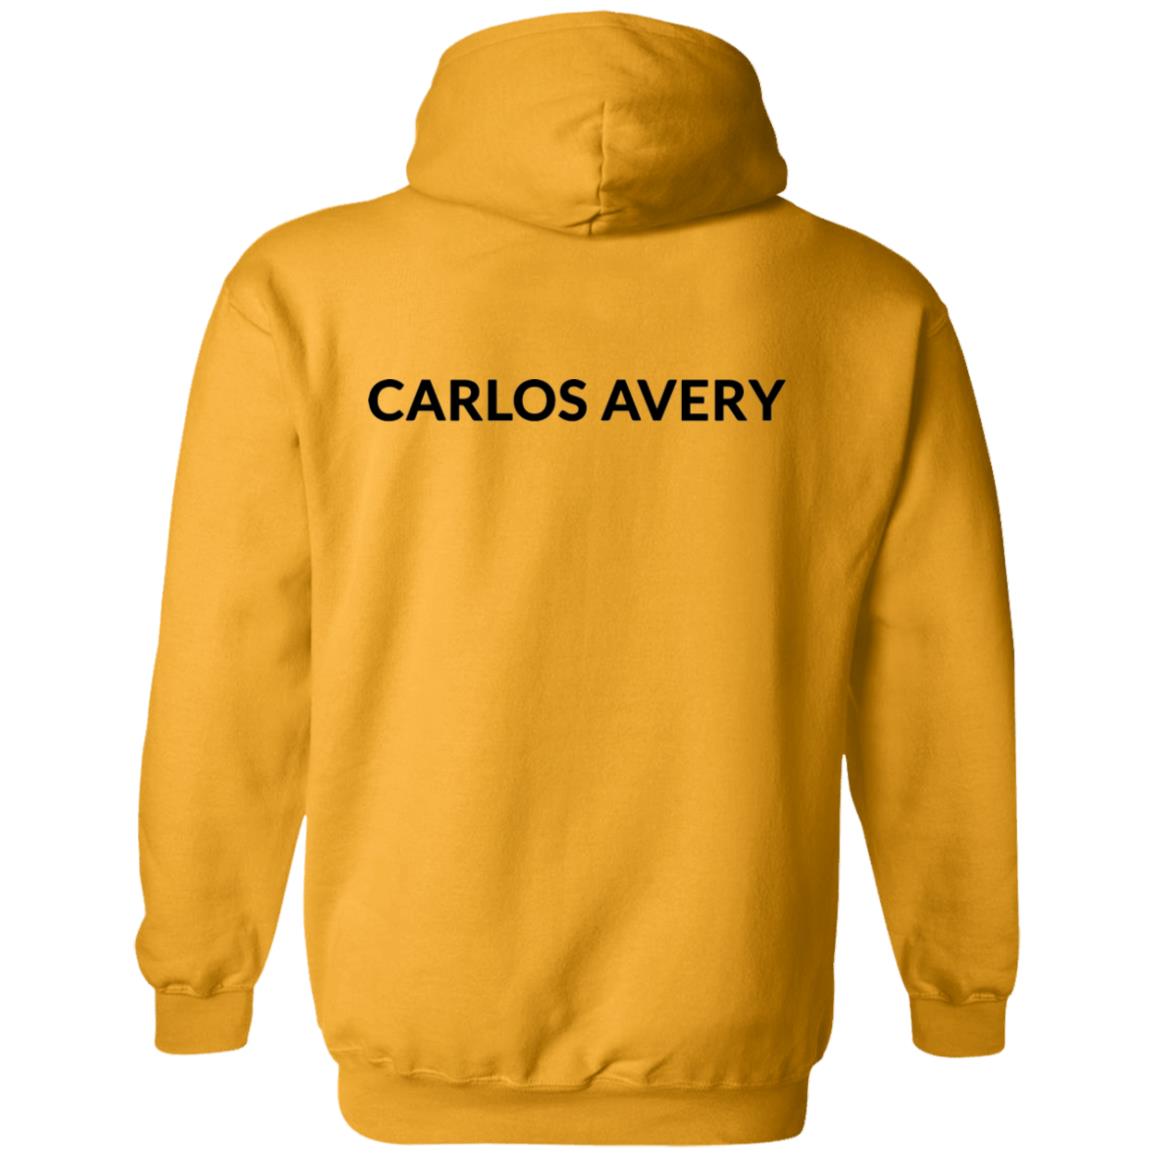 CARLOS AVERY